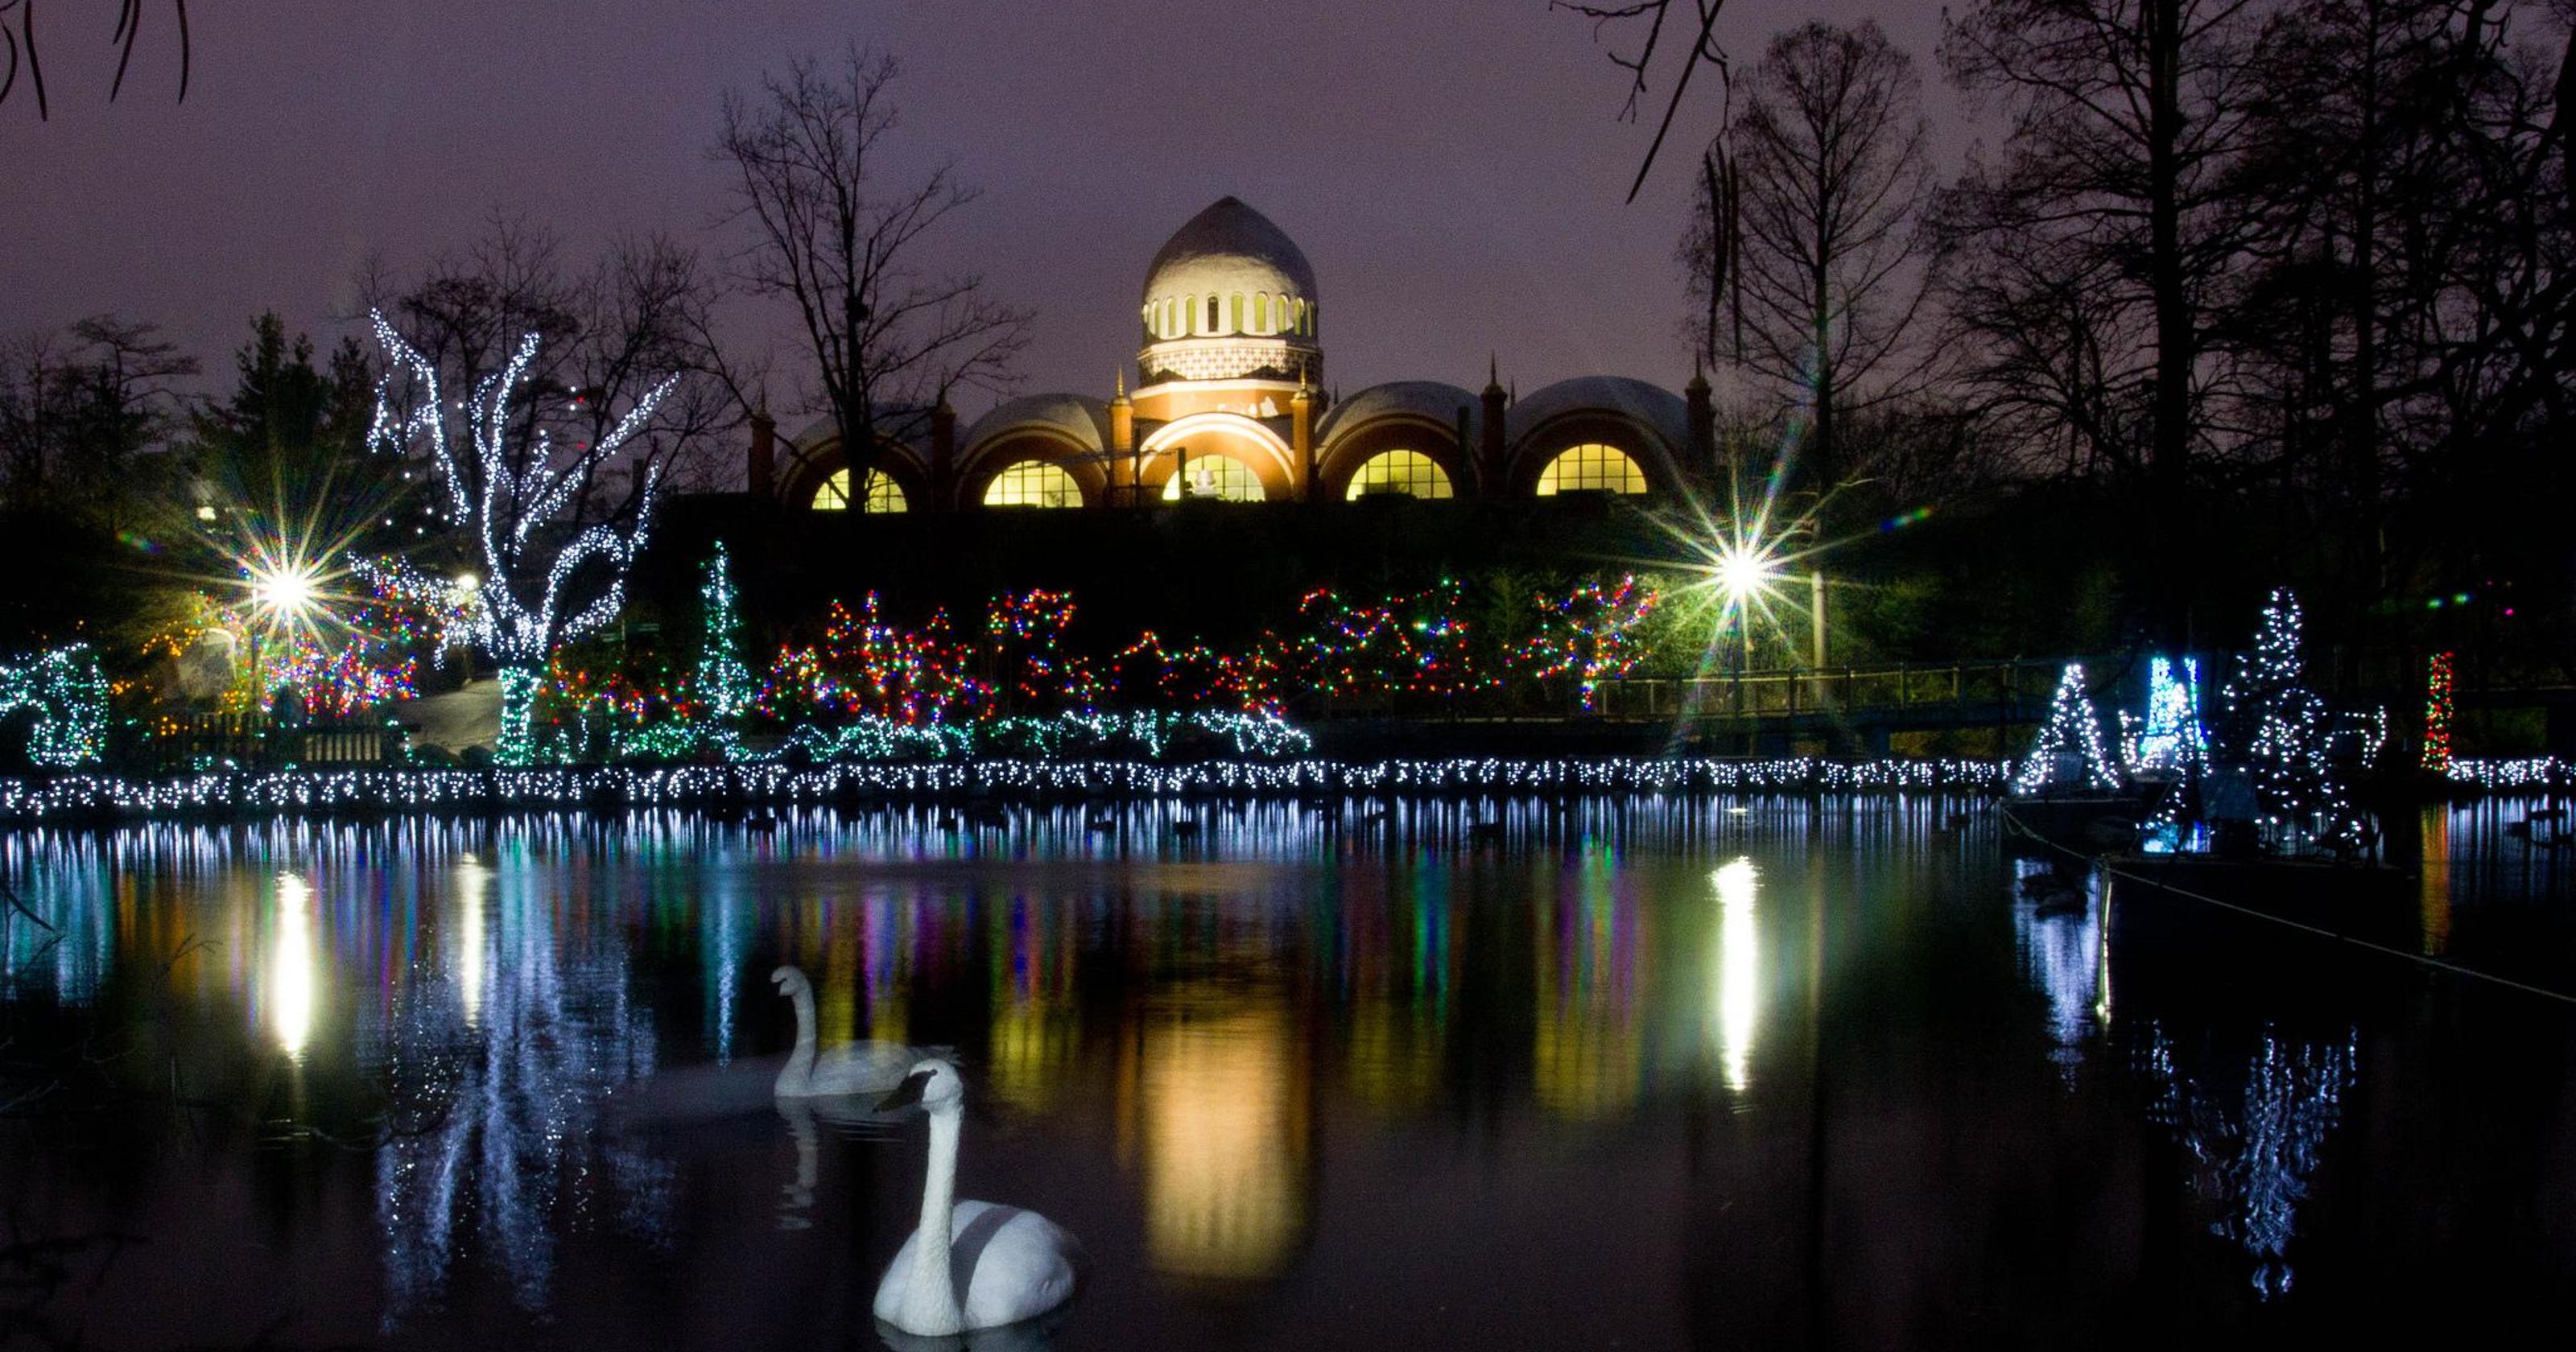 Cincinnati Zoo Festival of Lights opens Saturday